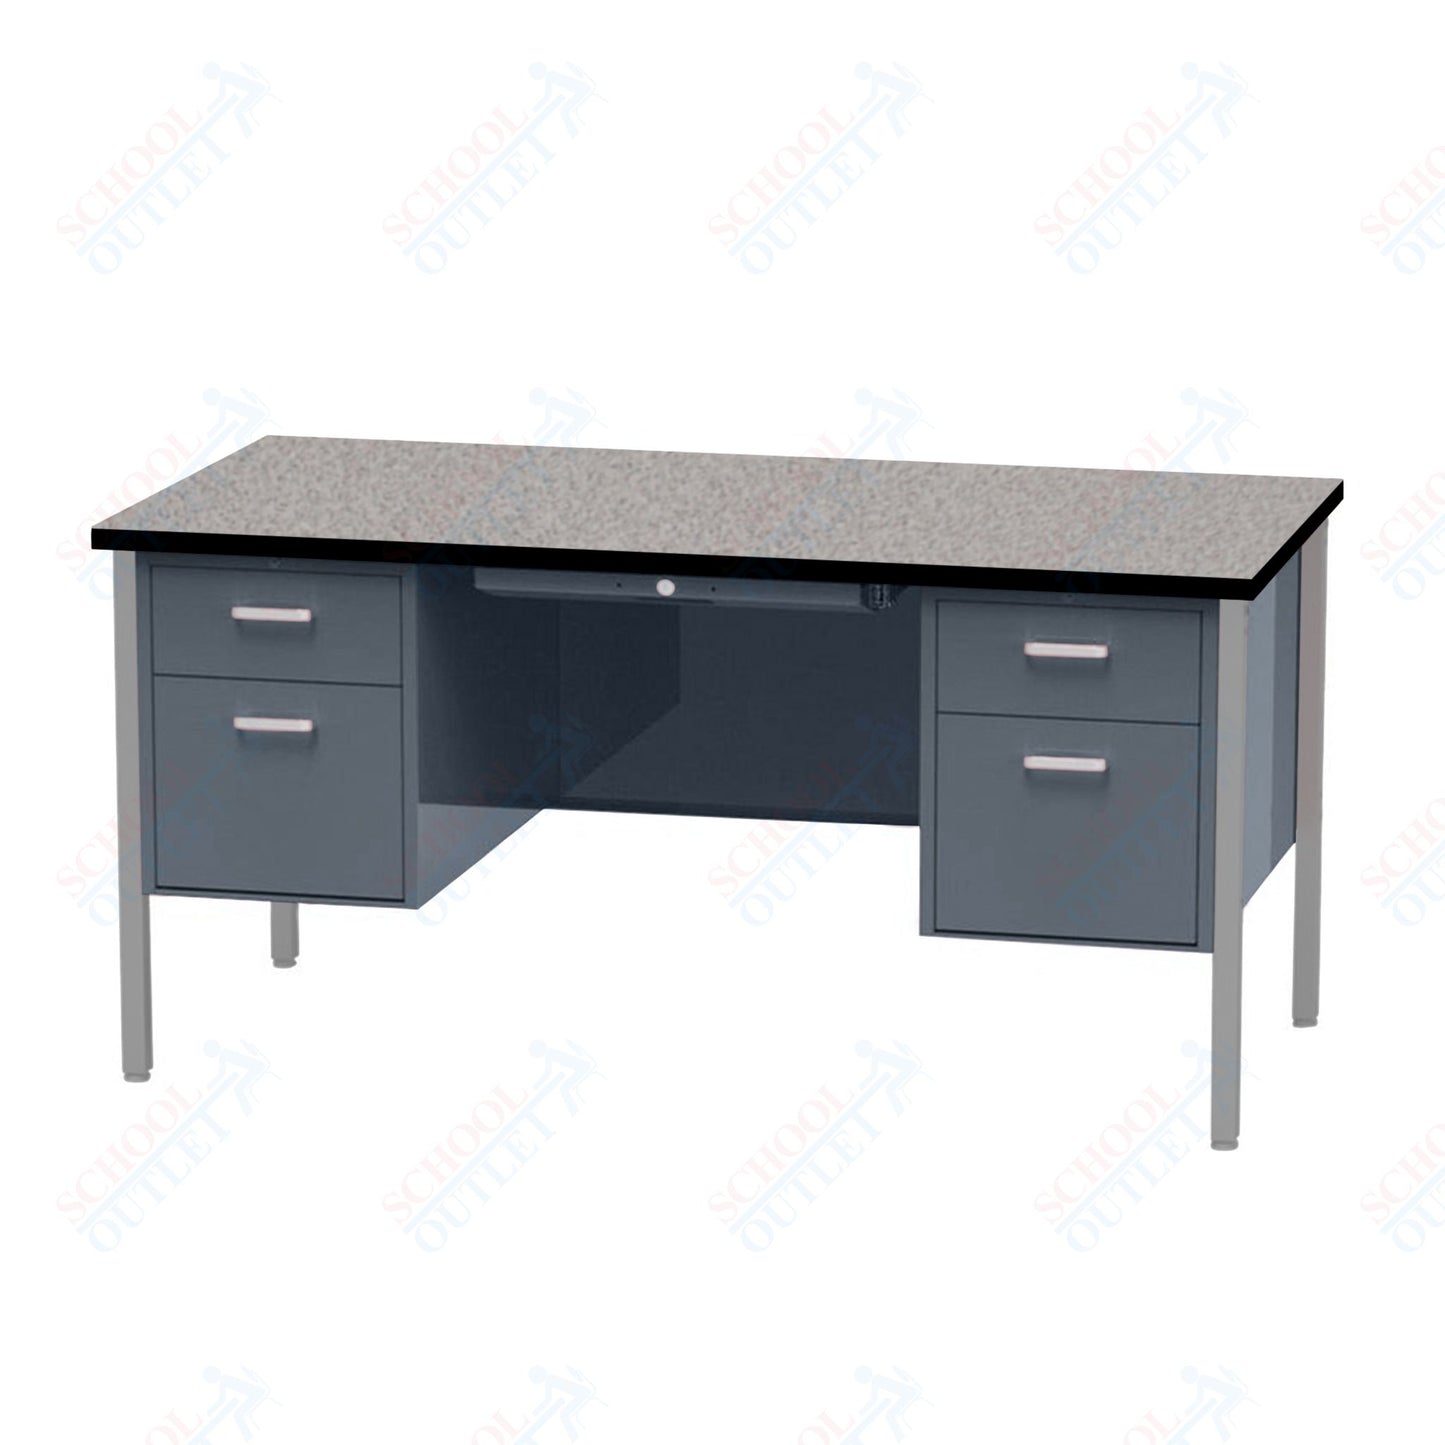 Virco 646 Double Pedestal Teacher Desk - 640 Series with a 30"D x 60"L High-pressure Laminate Surface